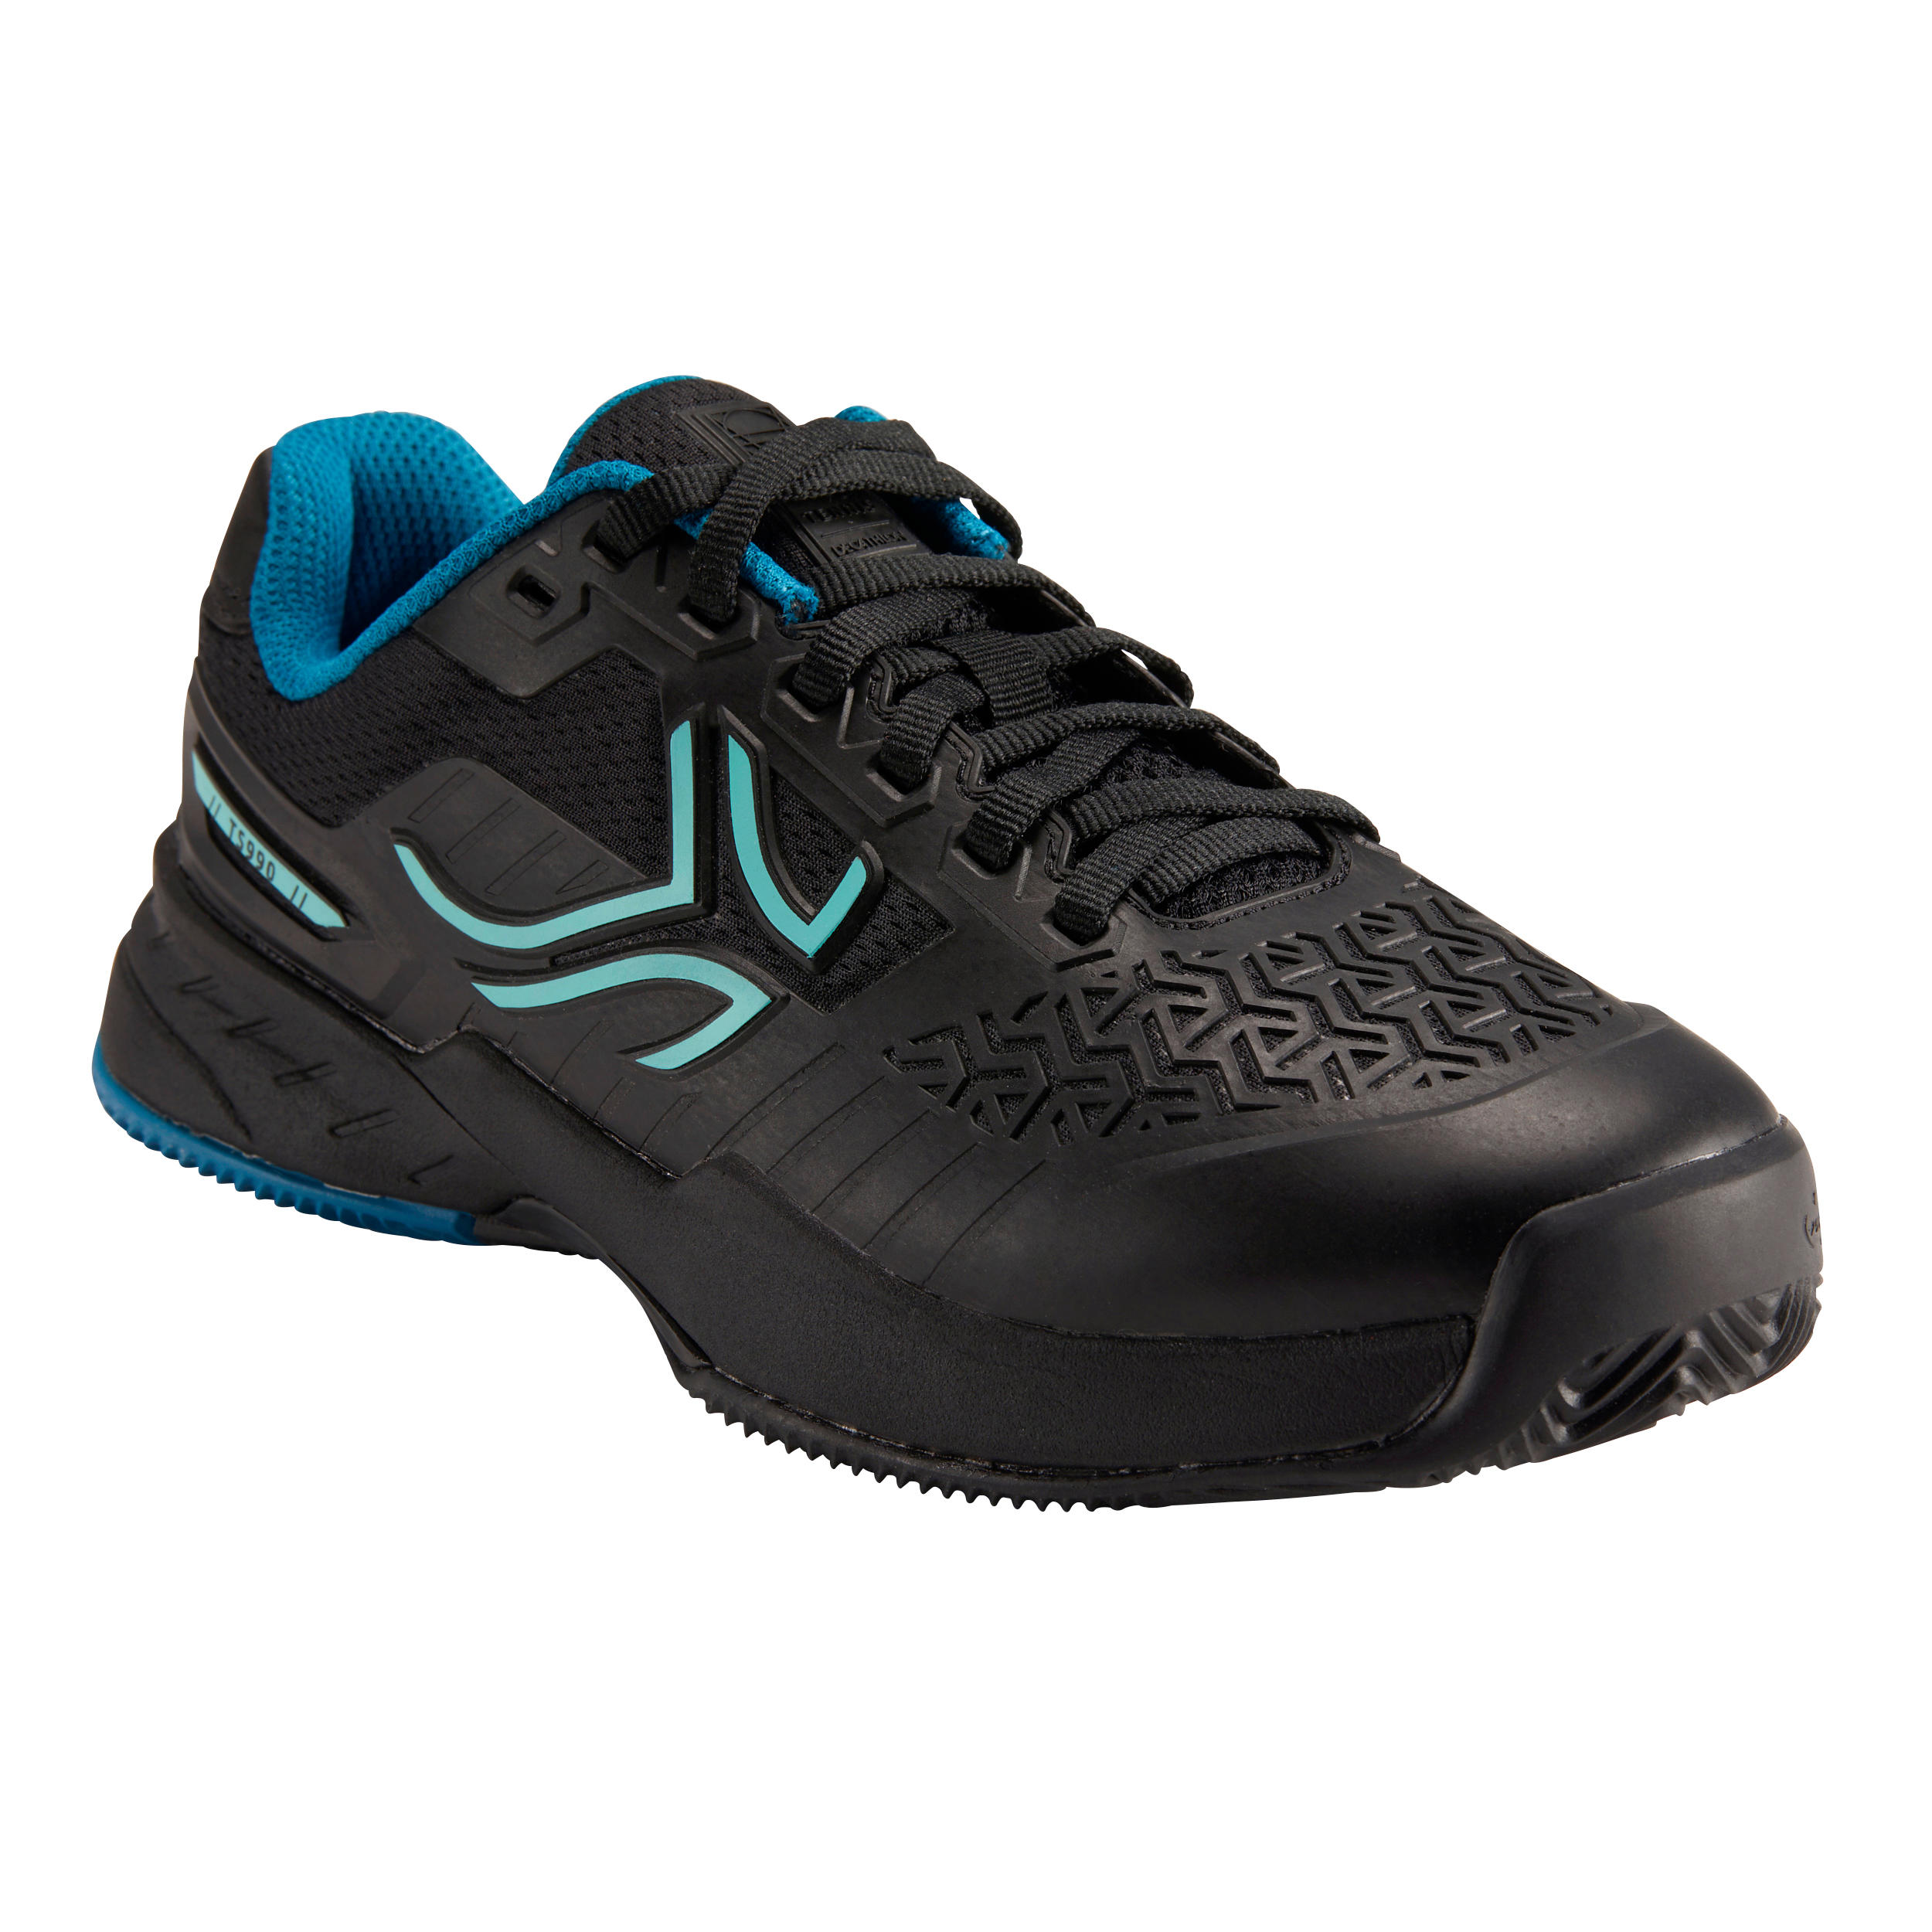 ARTENGO Kids' Clay Court Tennis Shoes TS990 JR